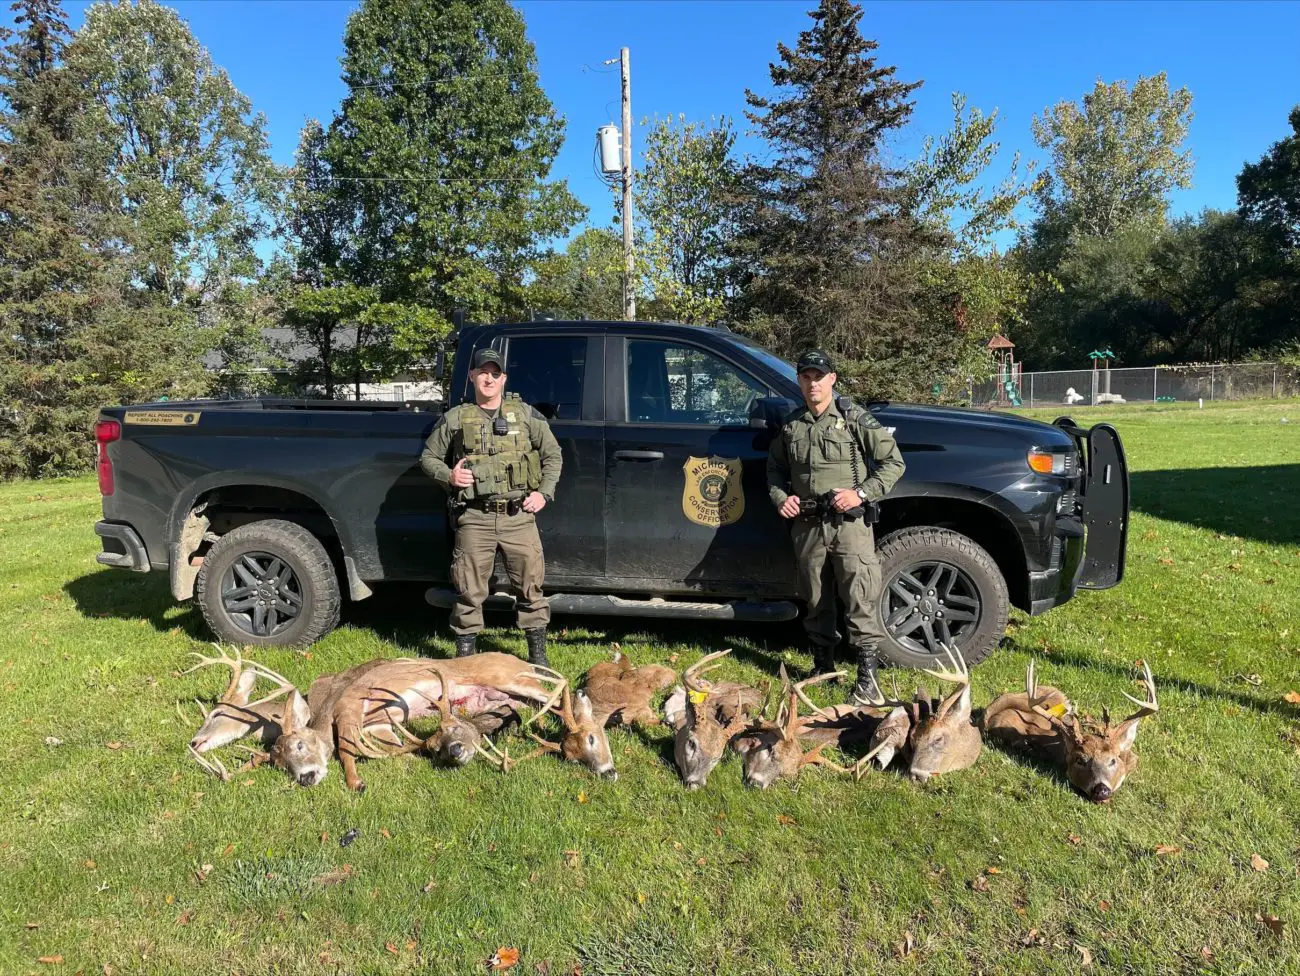 Southwest Michigan Man Charged With Poaching Deer – 9 Remarkable Trophy Bucks Taken